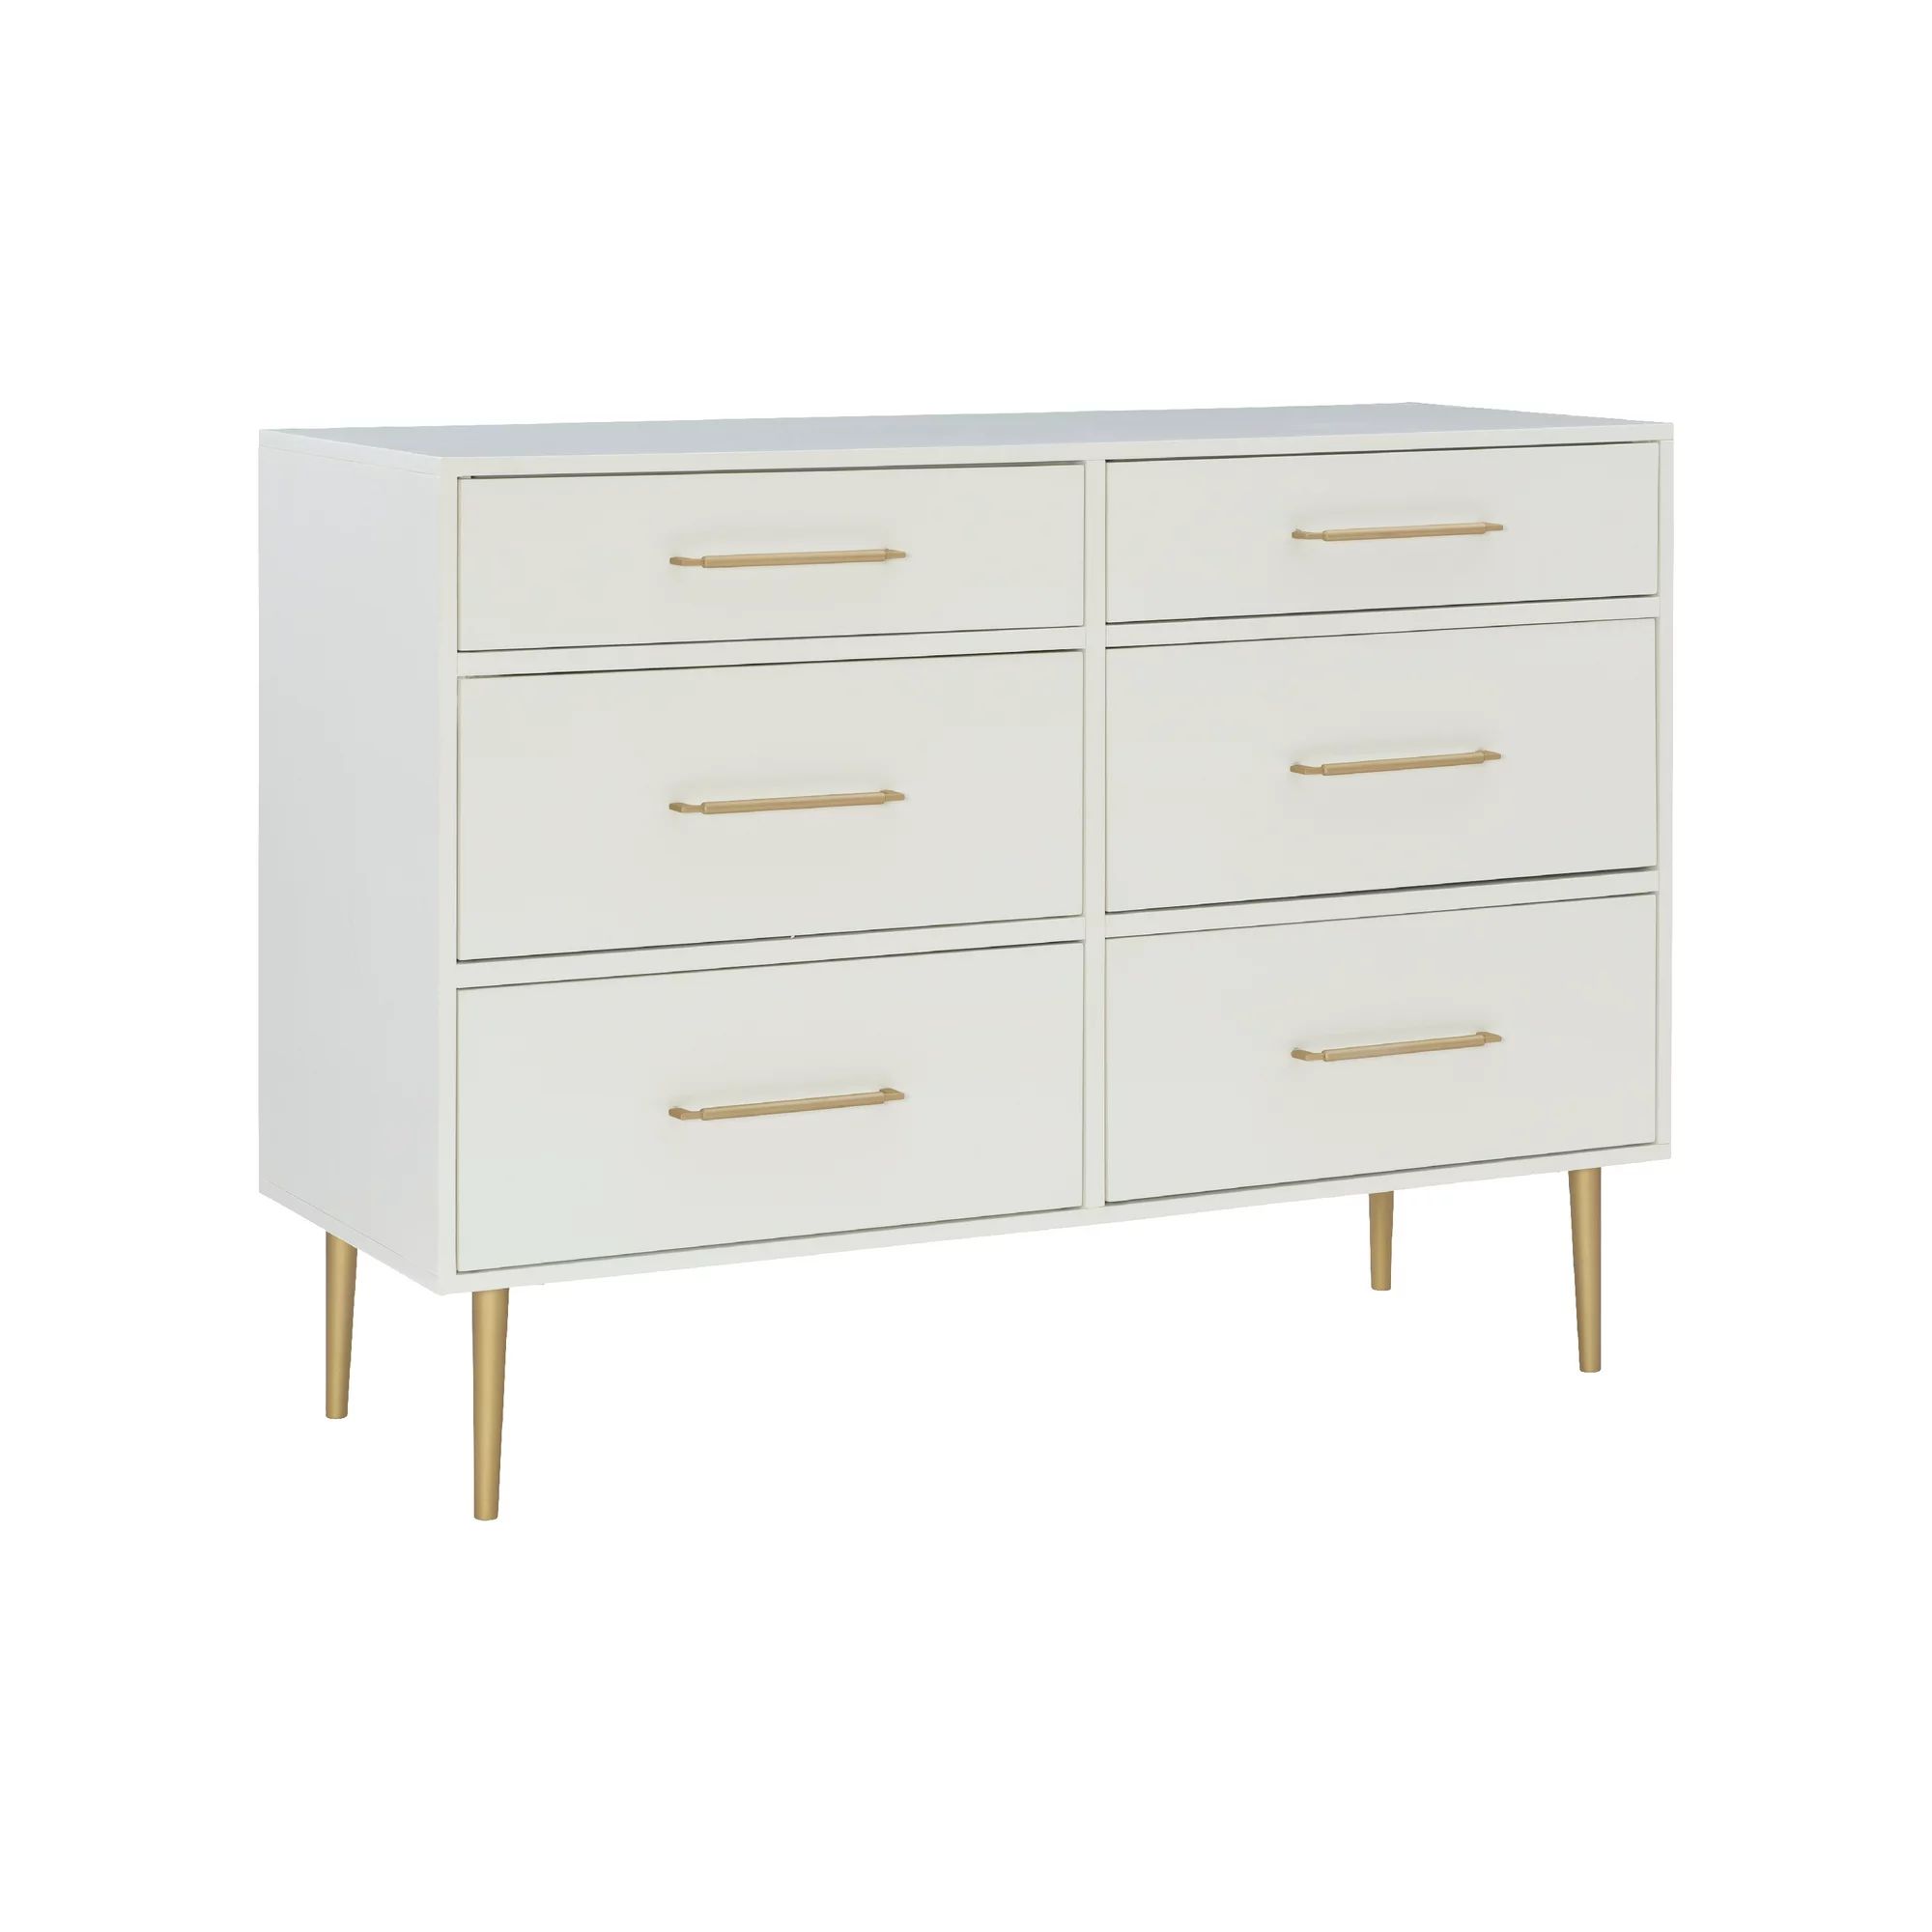 Linon Galena 6-Drawer Dresser, White and Gold Finish - Walmart.com | Walmart (US)